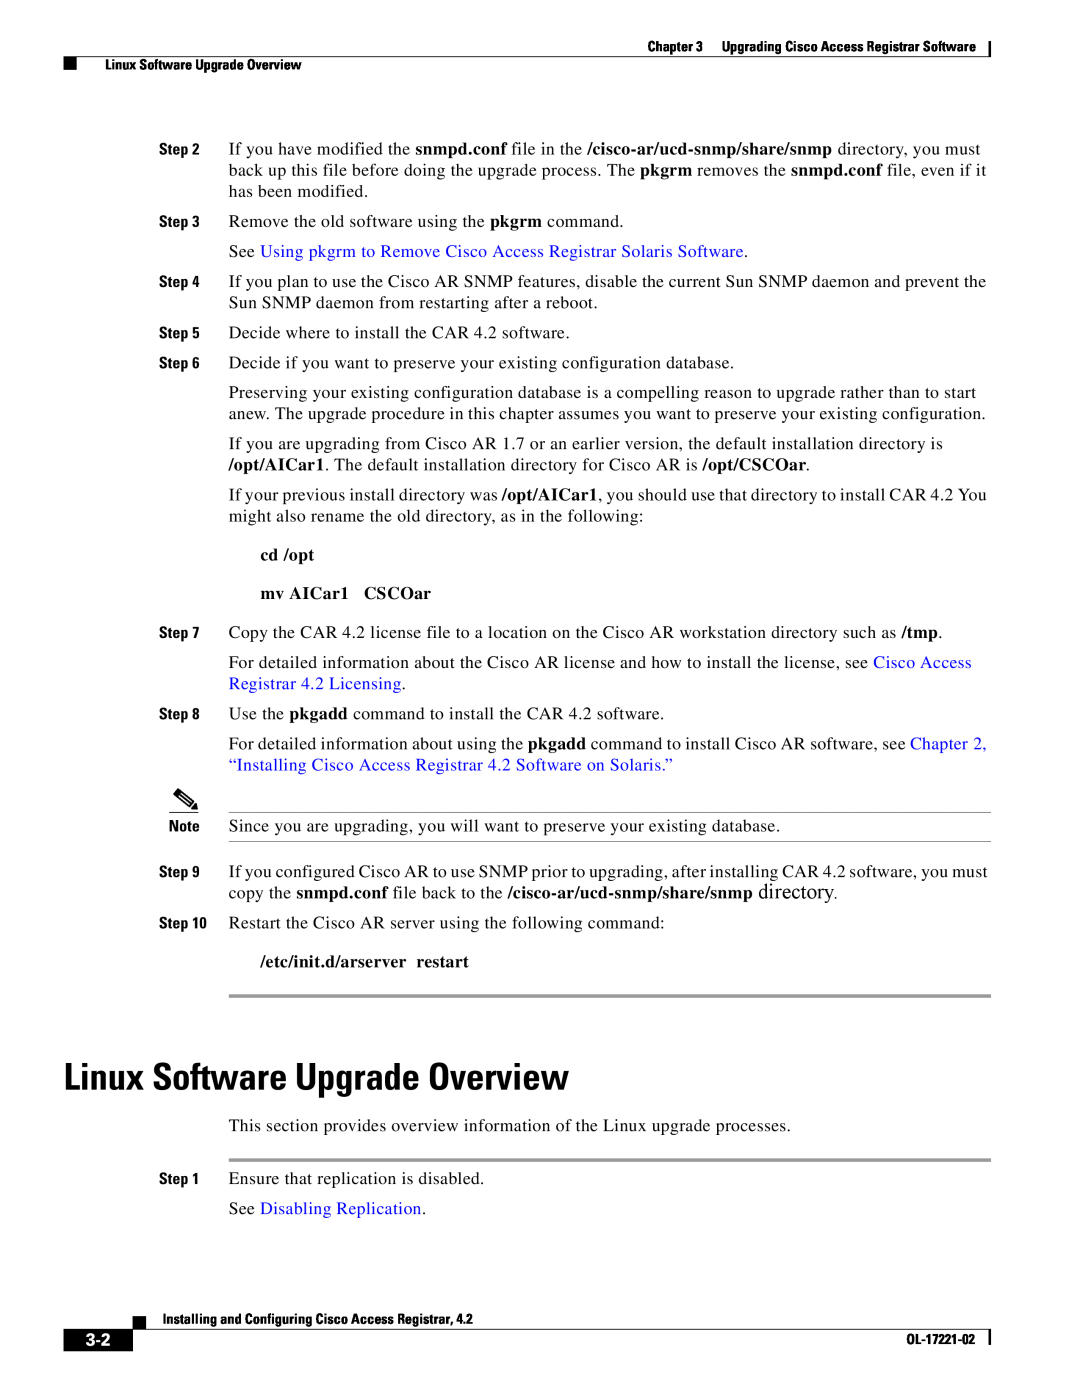 Cisco Systems 4.2 manual Linux Software Upgrade Overview, See Using pkgrm to Remove Cisco Access Registrar Solaris Software 